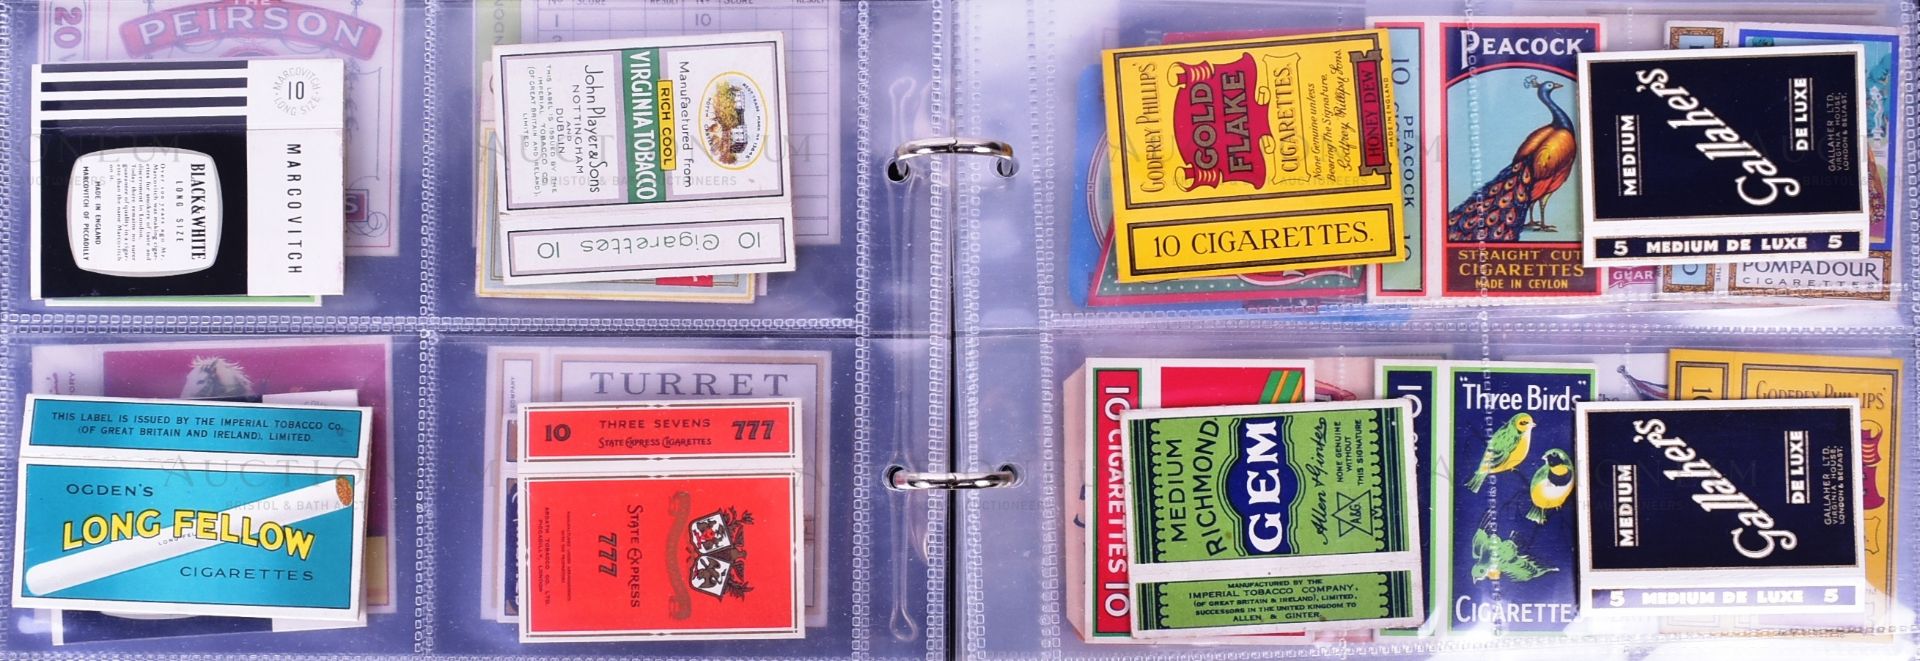 CIGARETTE PACKETS - ALBUM OF VINTAGE CIGARETTE PACKS - Image 6 of 16